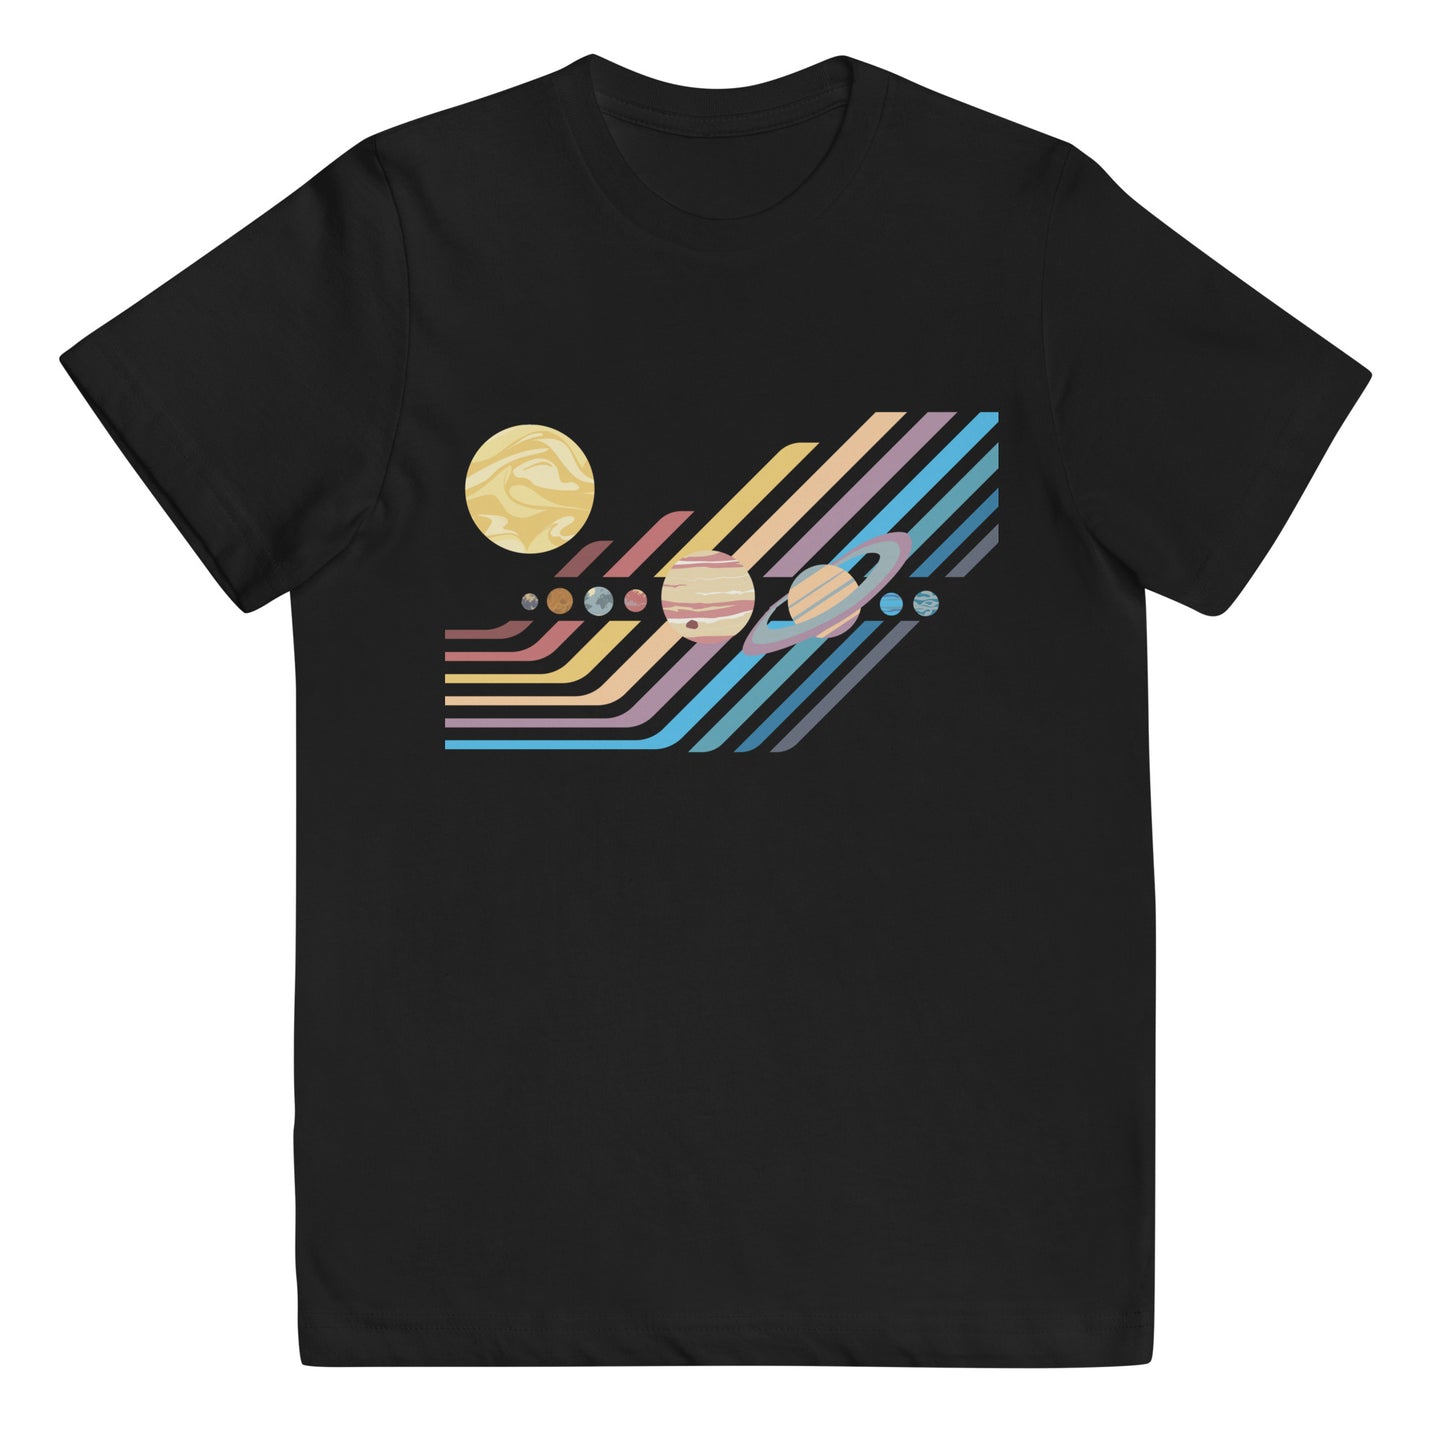 Solar System Youth jersey t-shirt retro